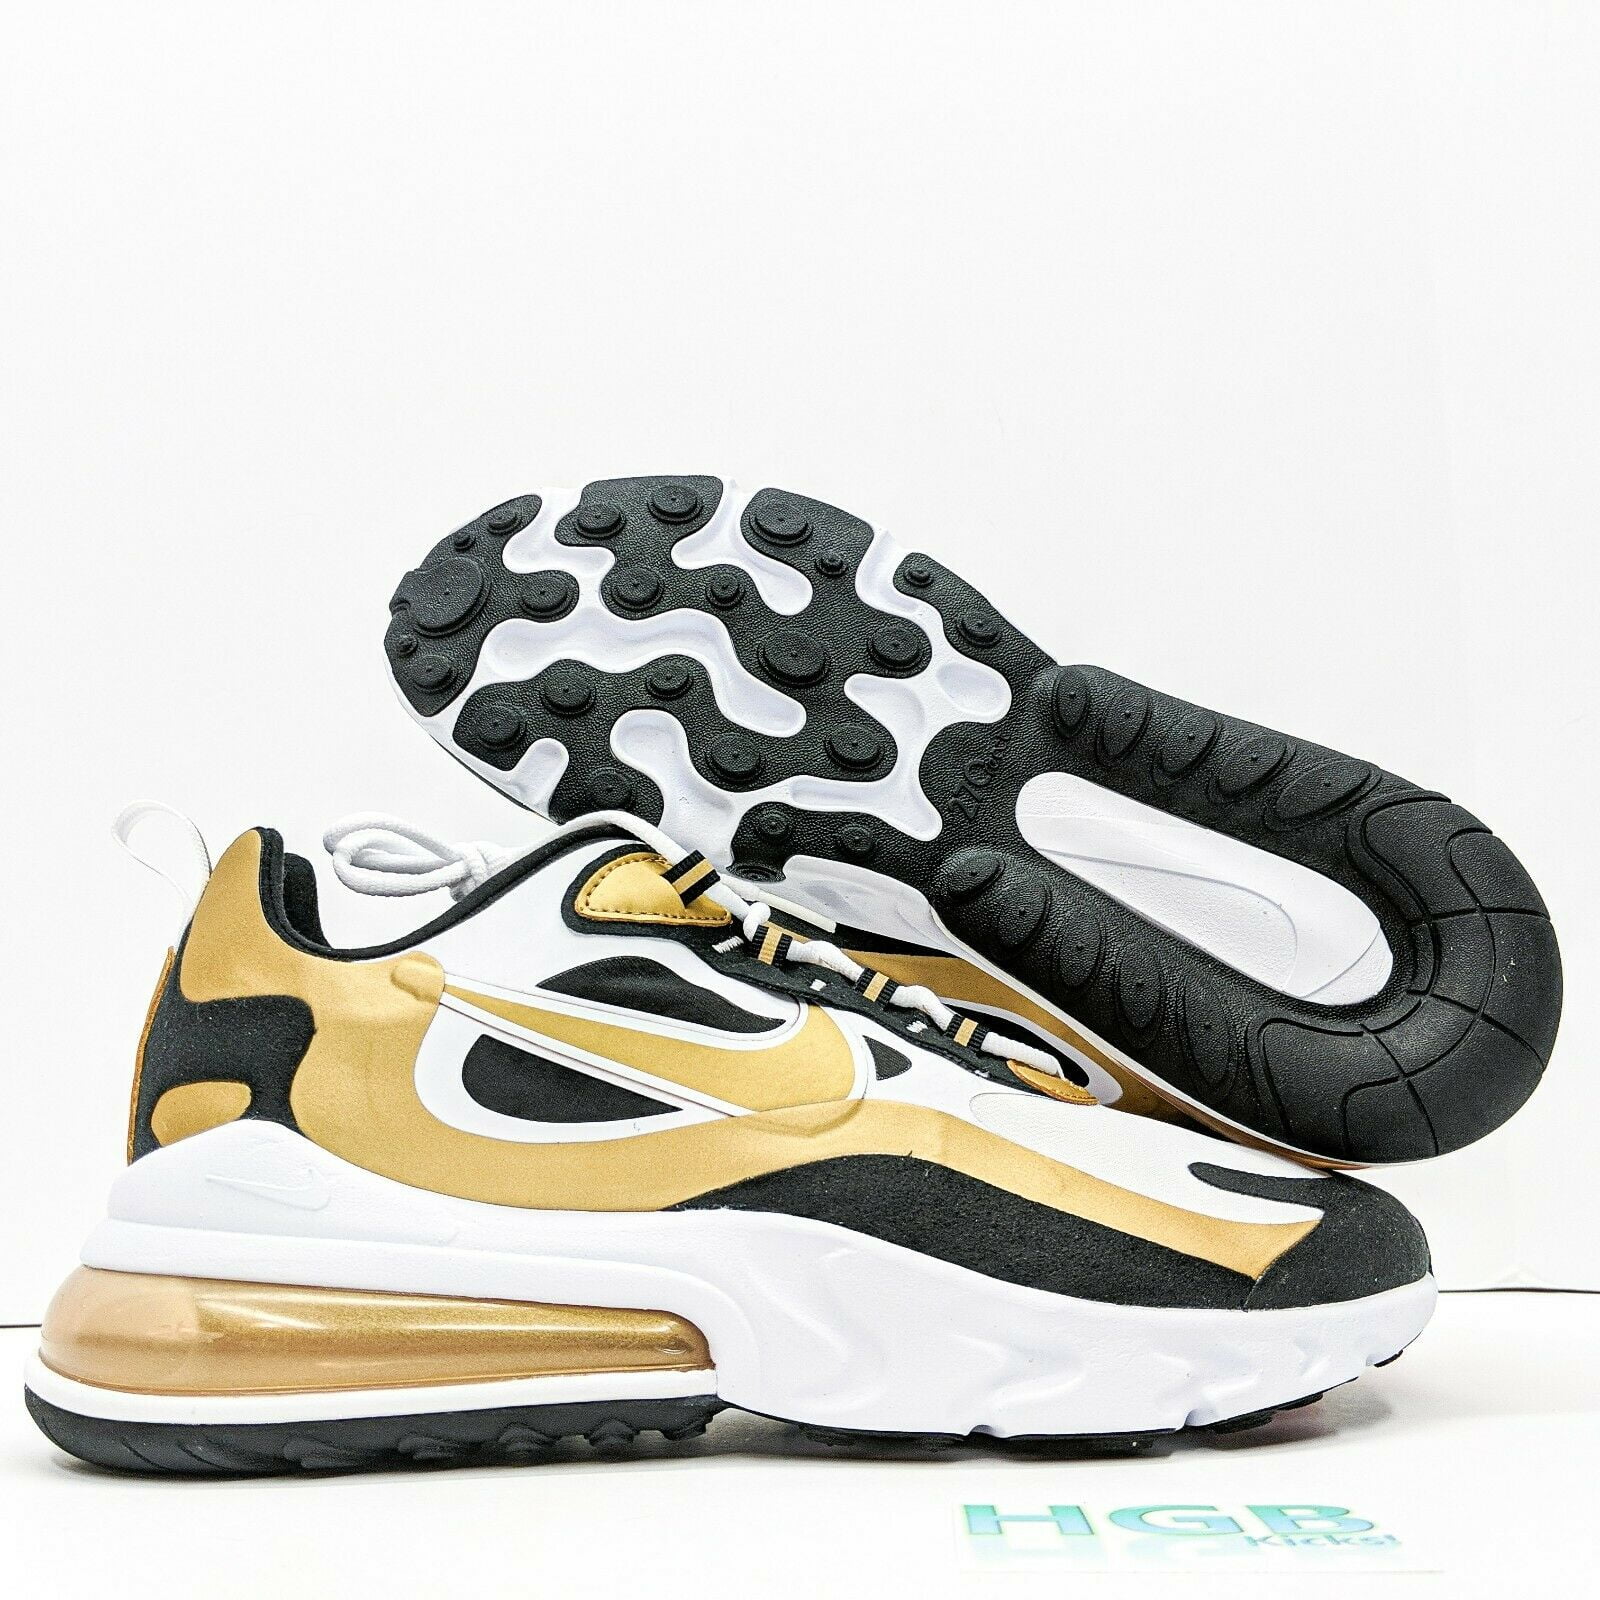 Nike Air Max 270 React Men's Shoes White-Metallic Gold Black cw7298-100 